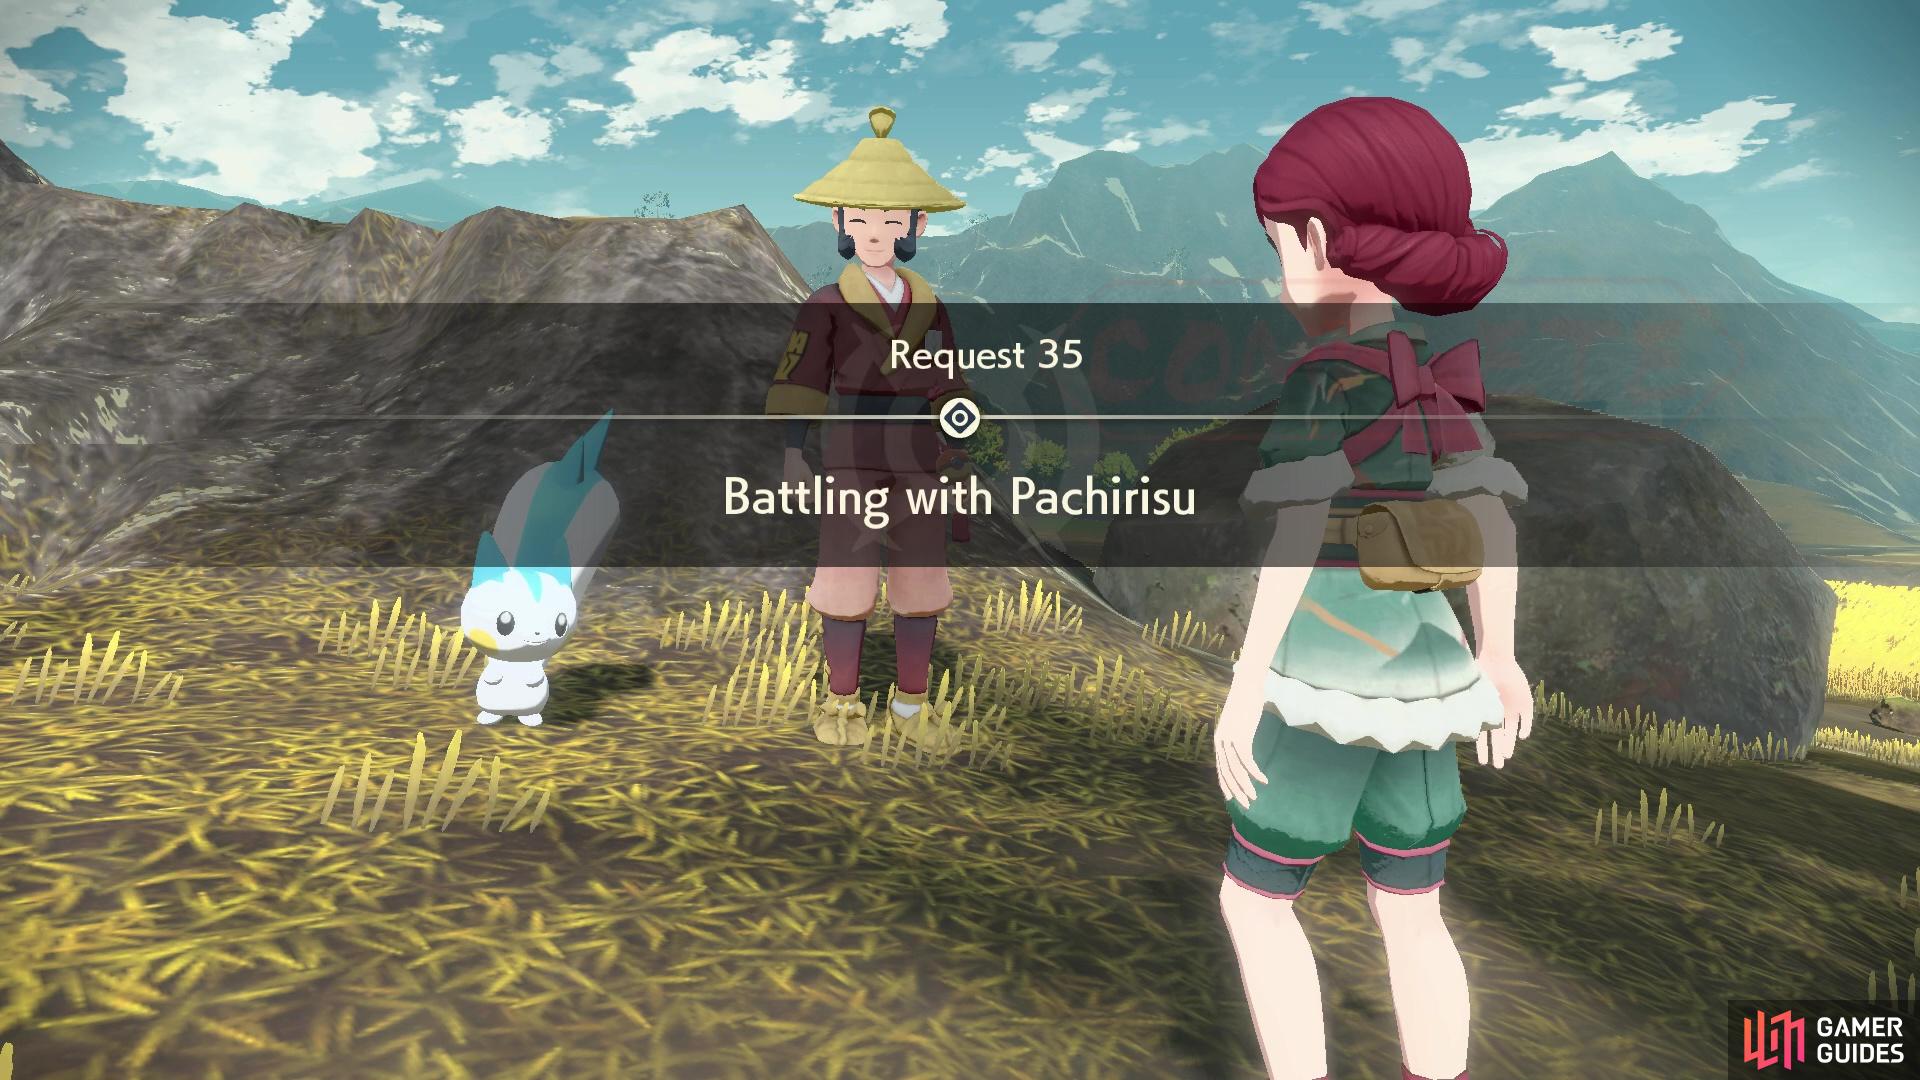 Request 35: Battling with Pachirisu.